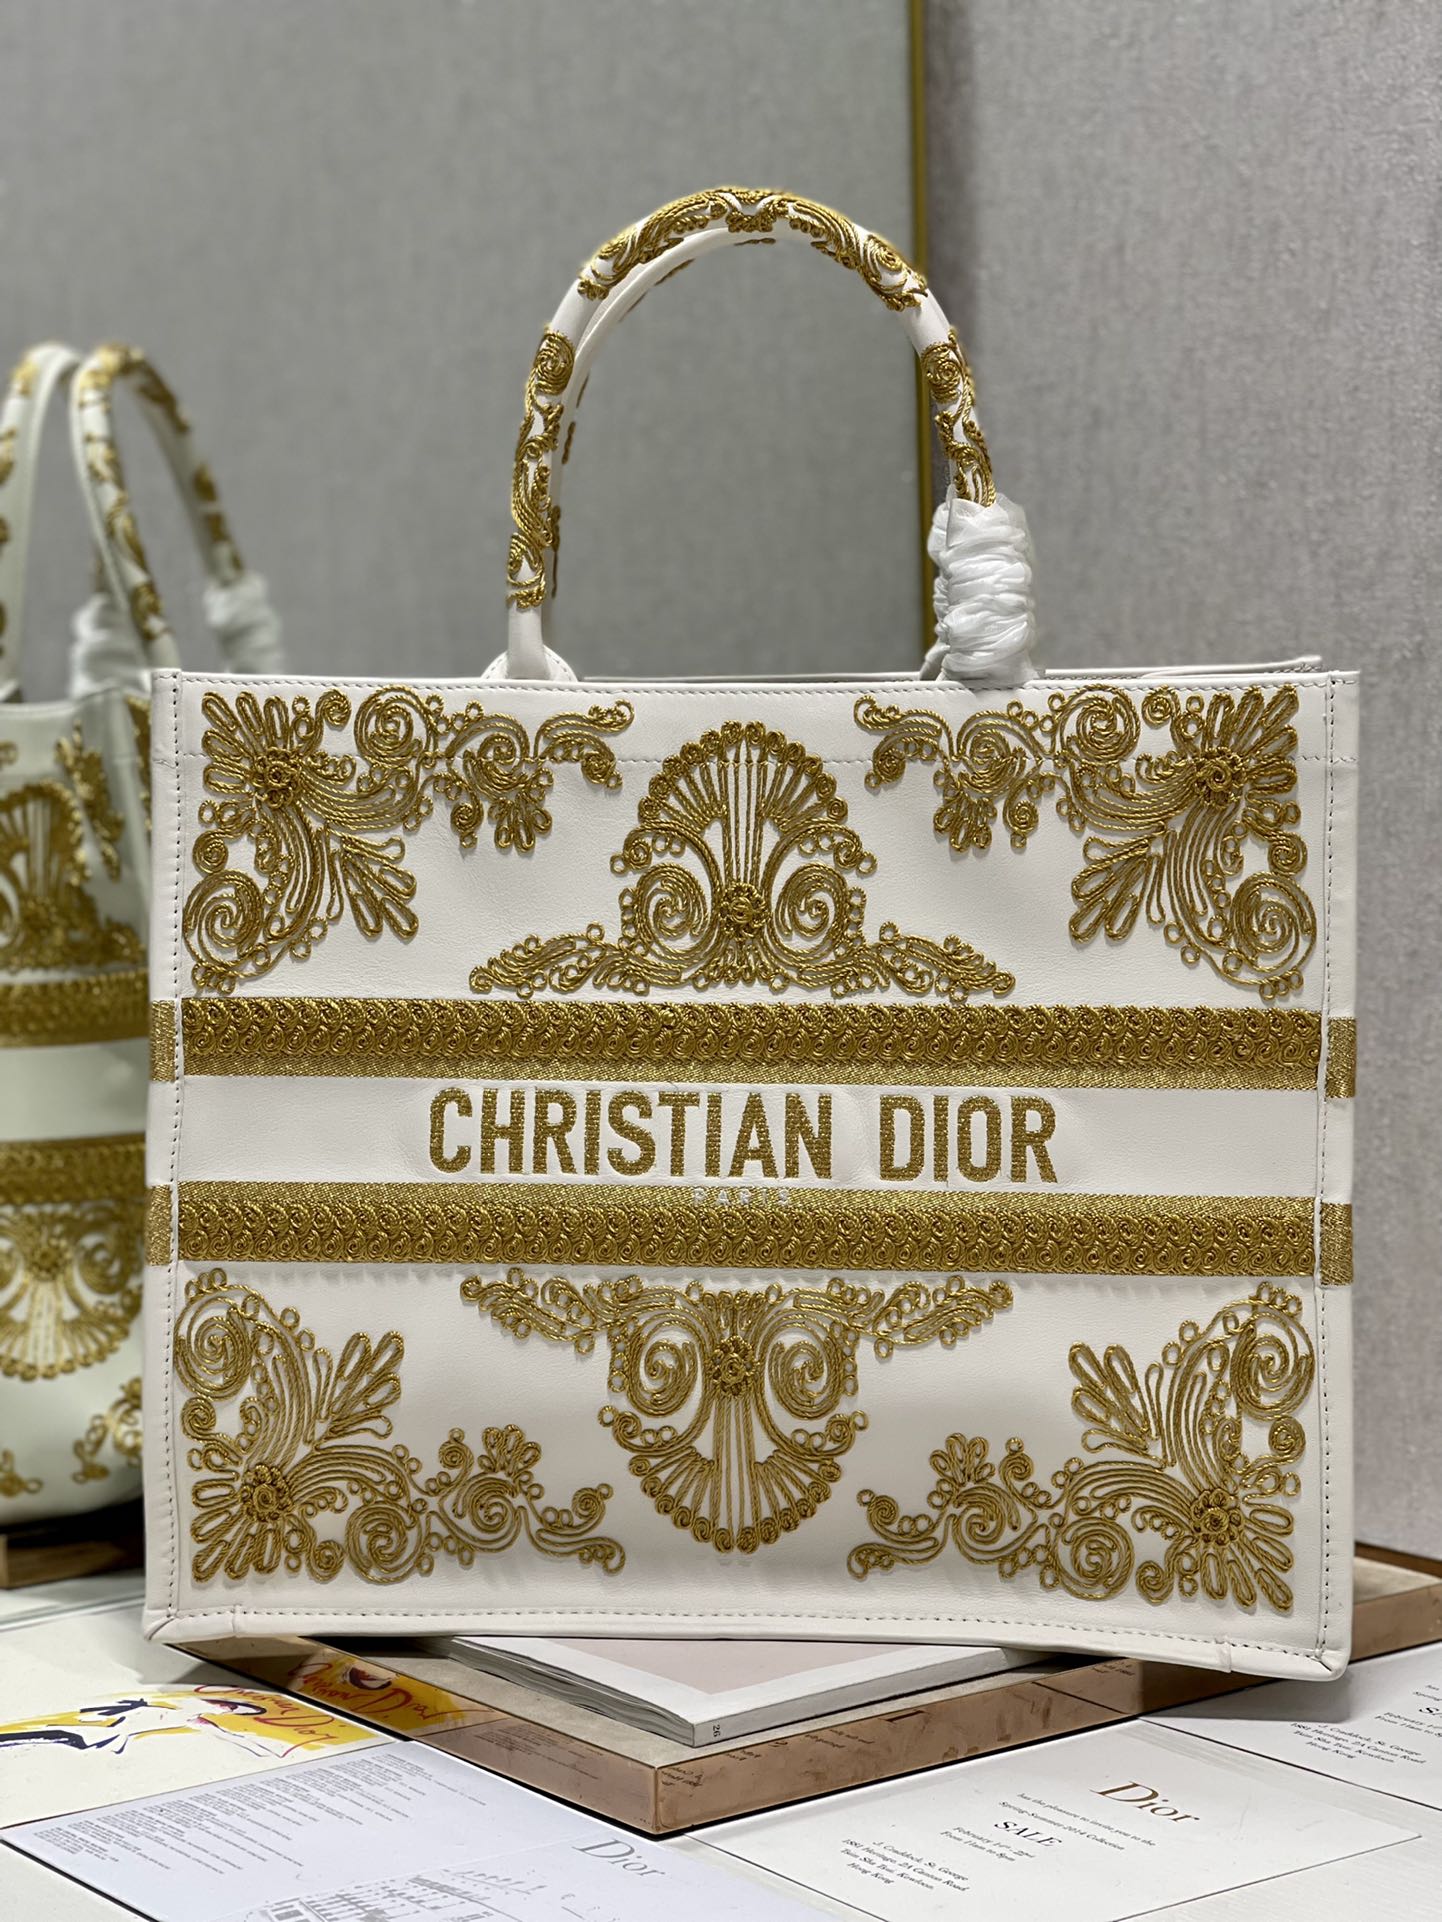 Dior book tote 购物袋